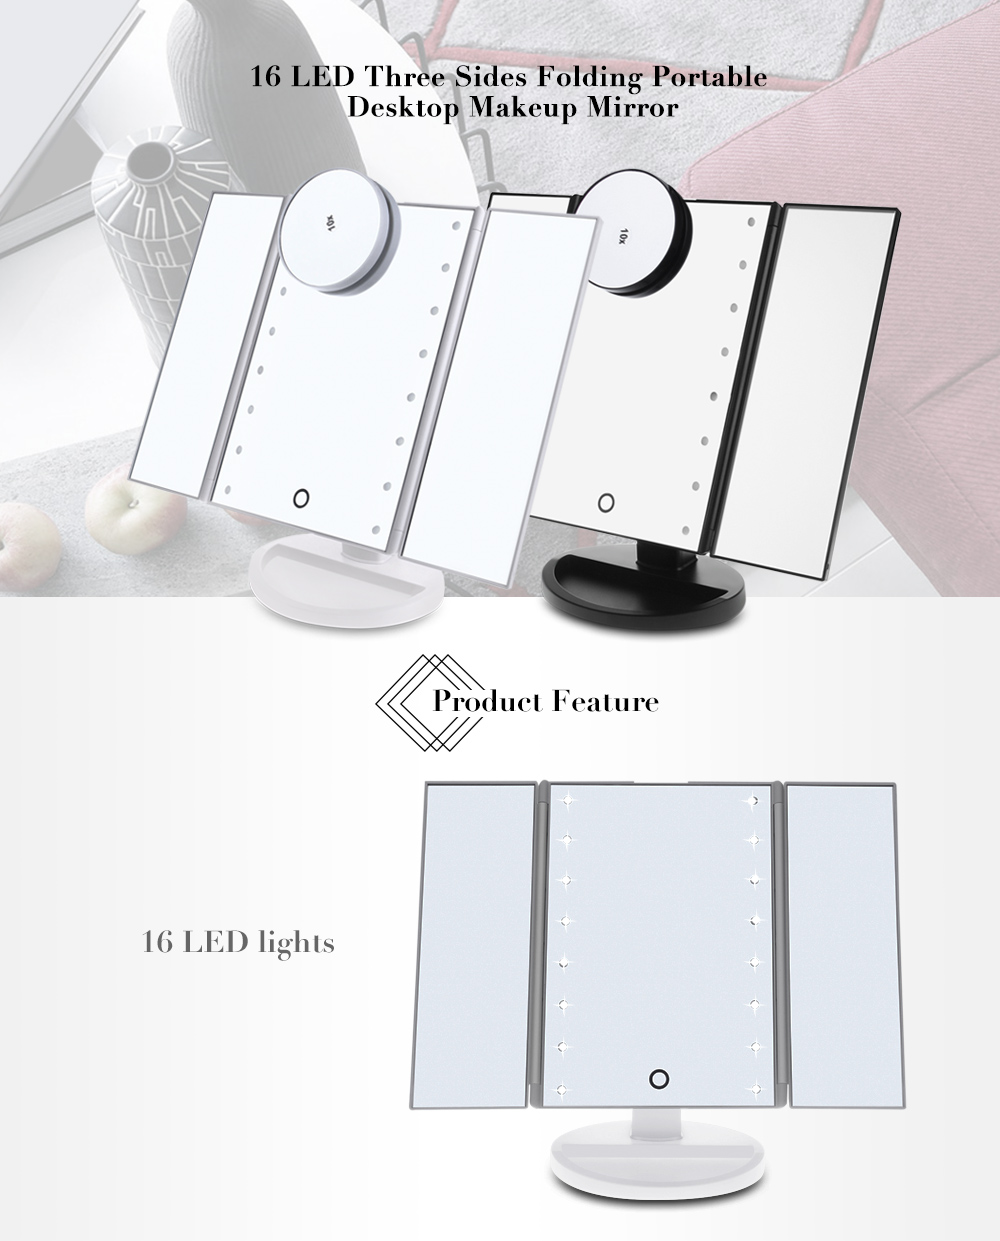 LED Three Sides Folding Portable Desktop Makeup Mirror